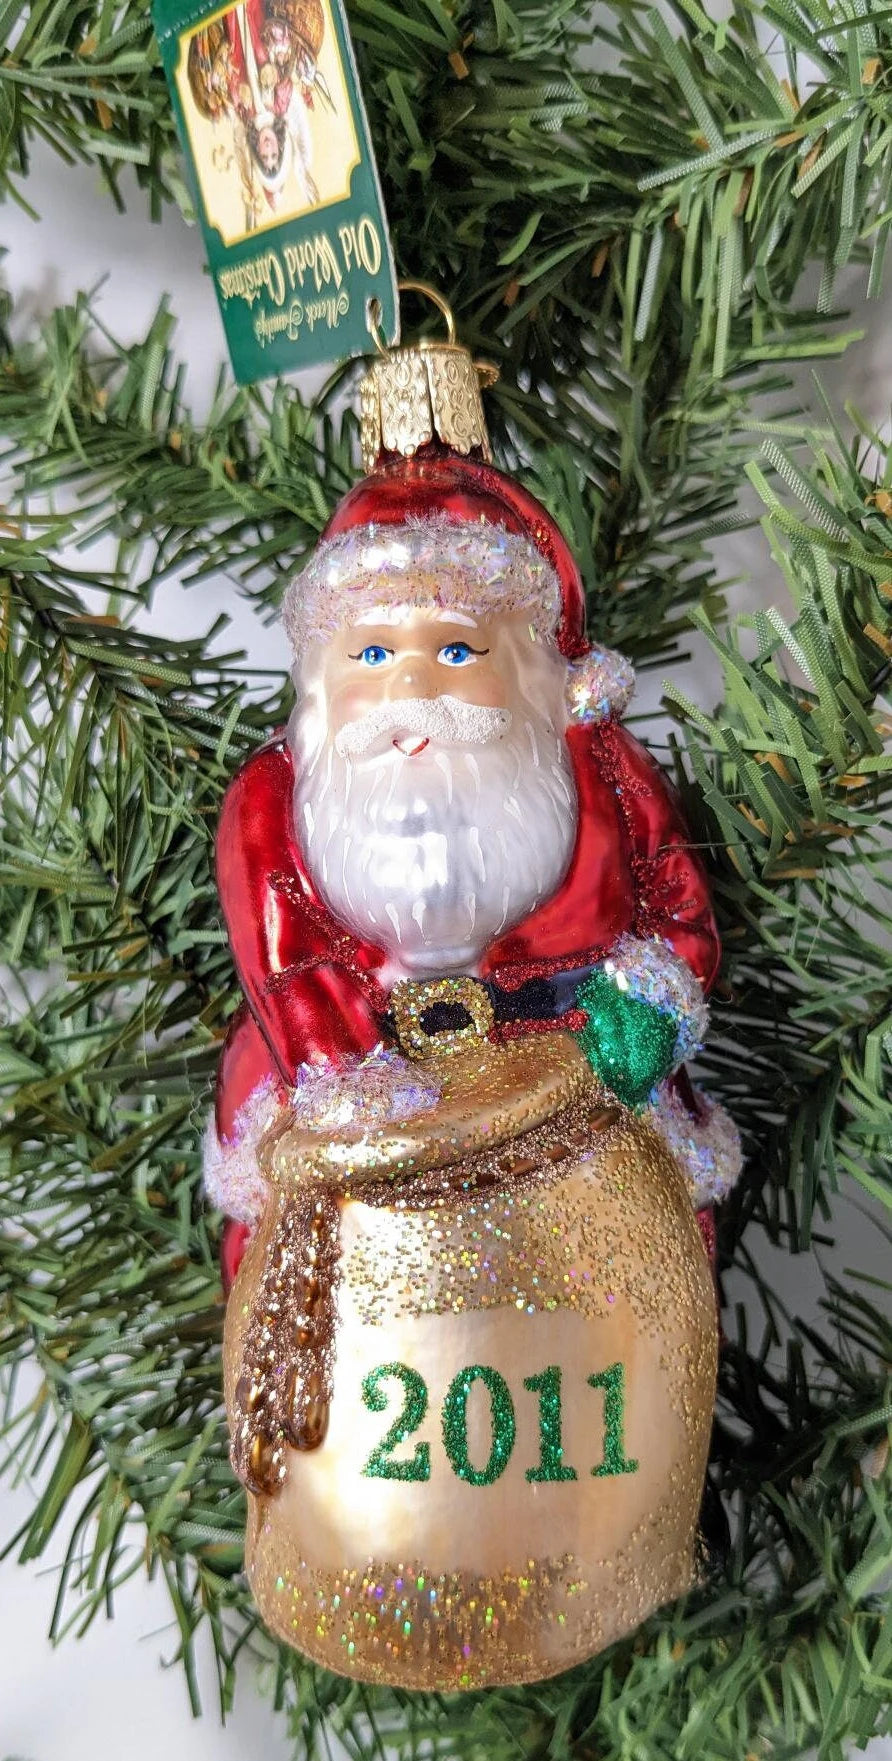 2011 Santa Old World Christmas Ornament